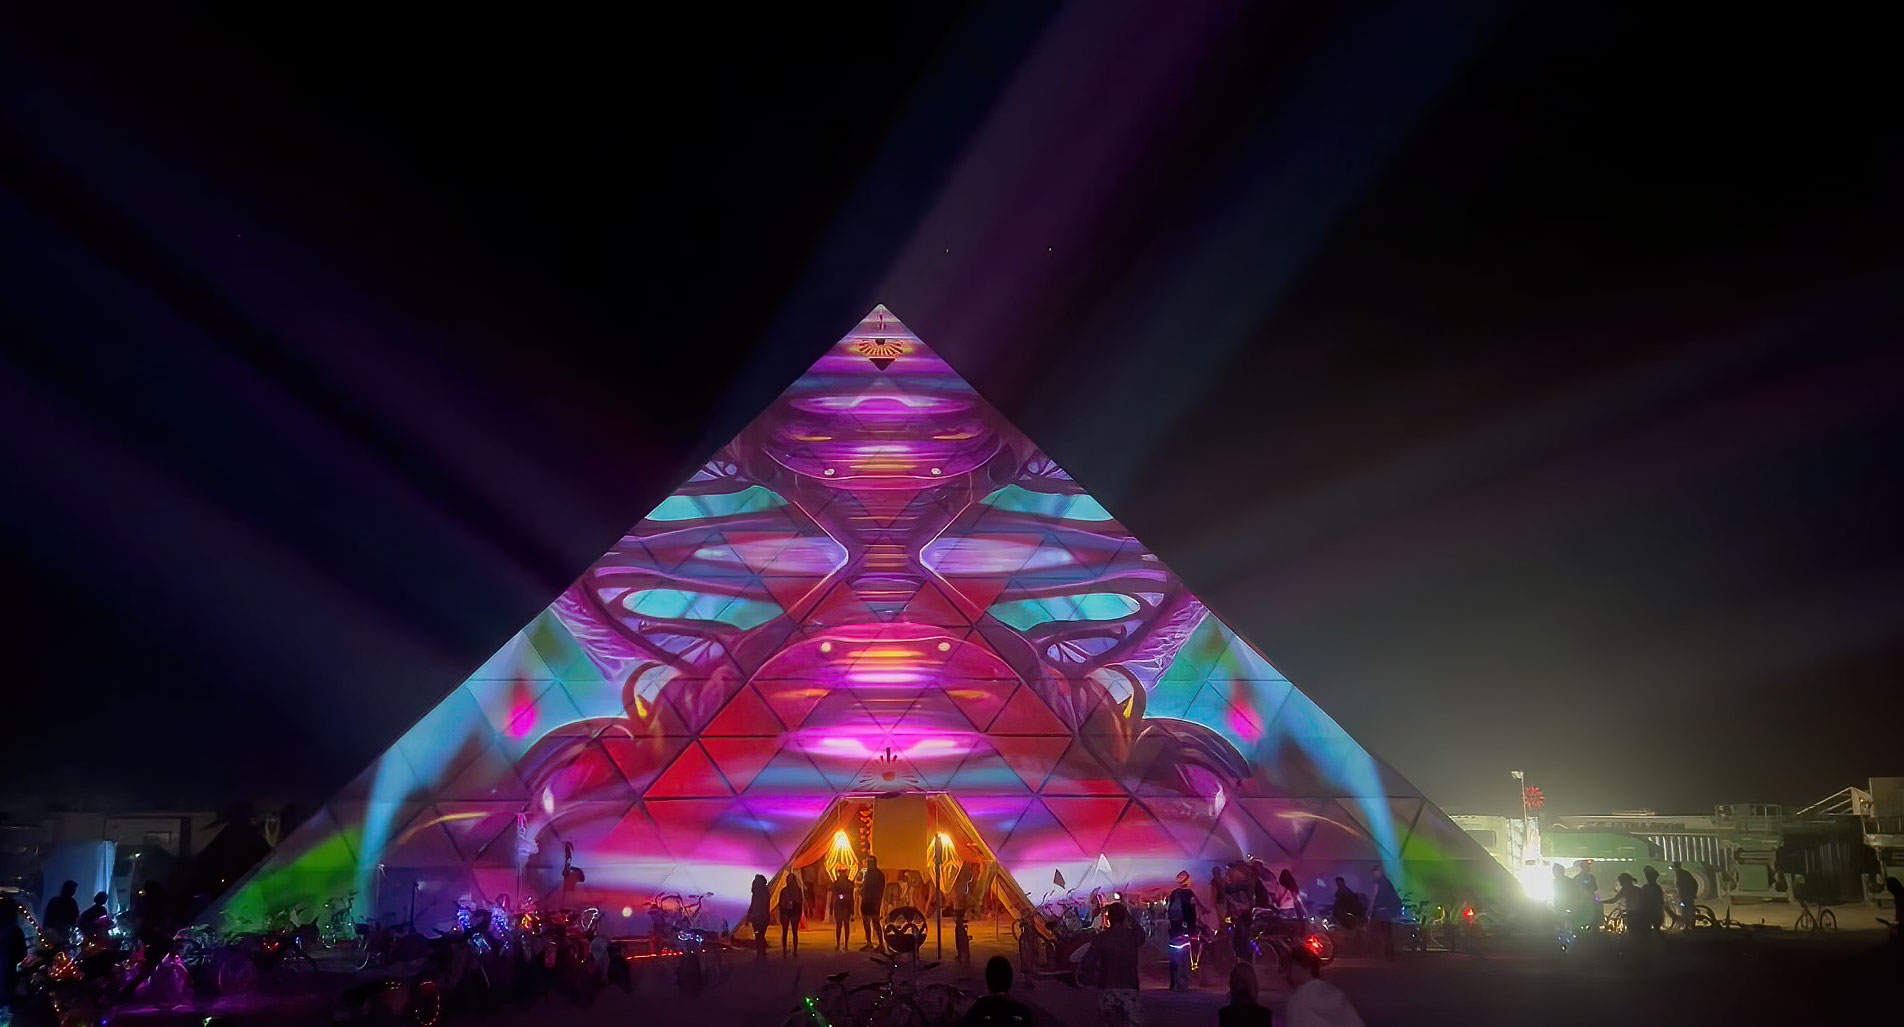 Pyramid Disco